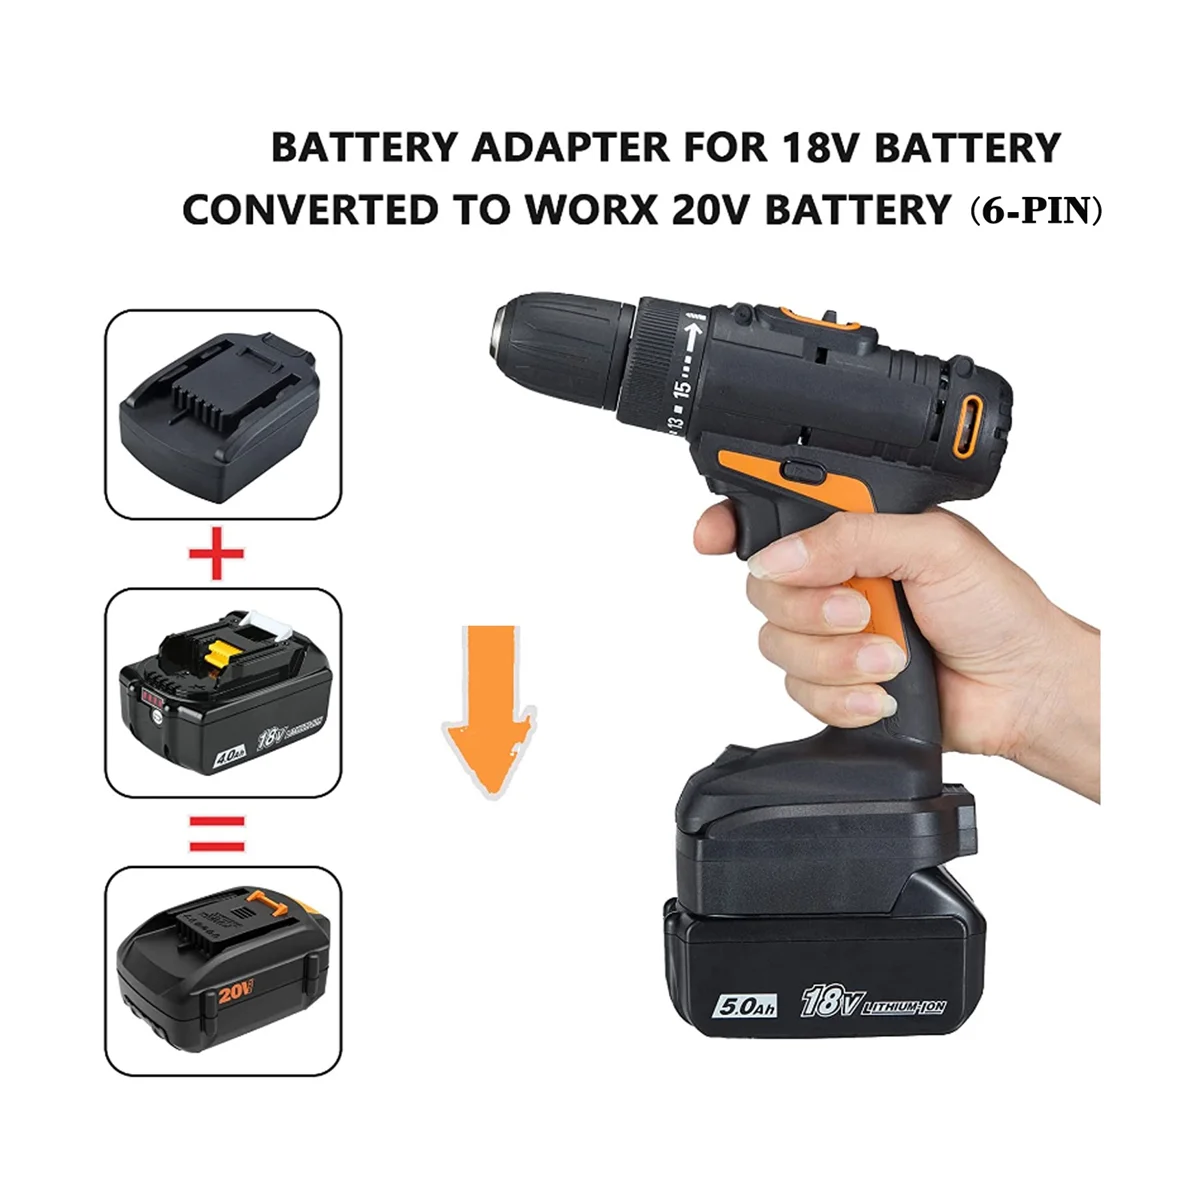 

Battery Adapter for Makita 18V BL Series Battery Conversion for WORX 20V 6PIN Lithium Battery Tool Converter